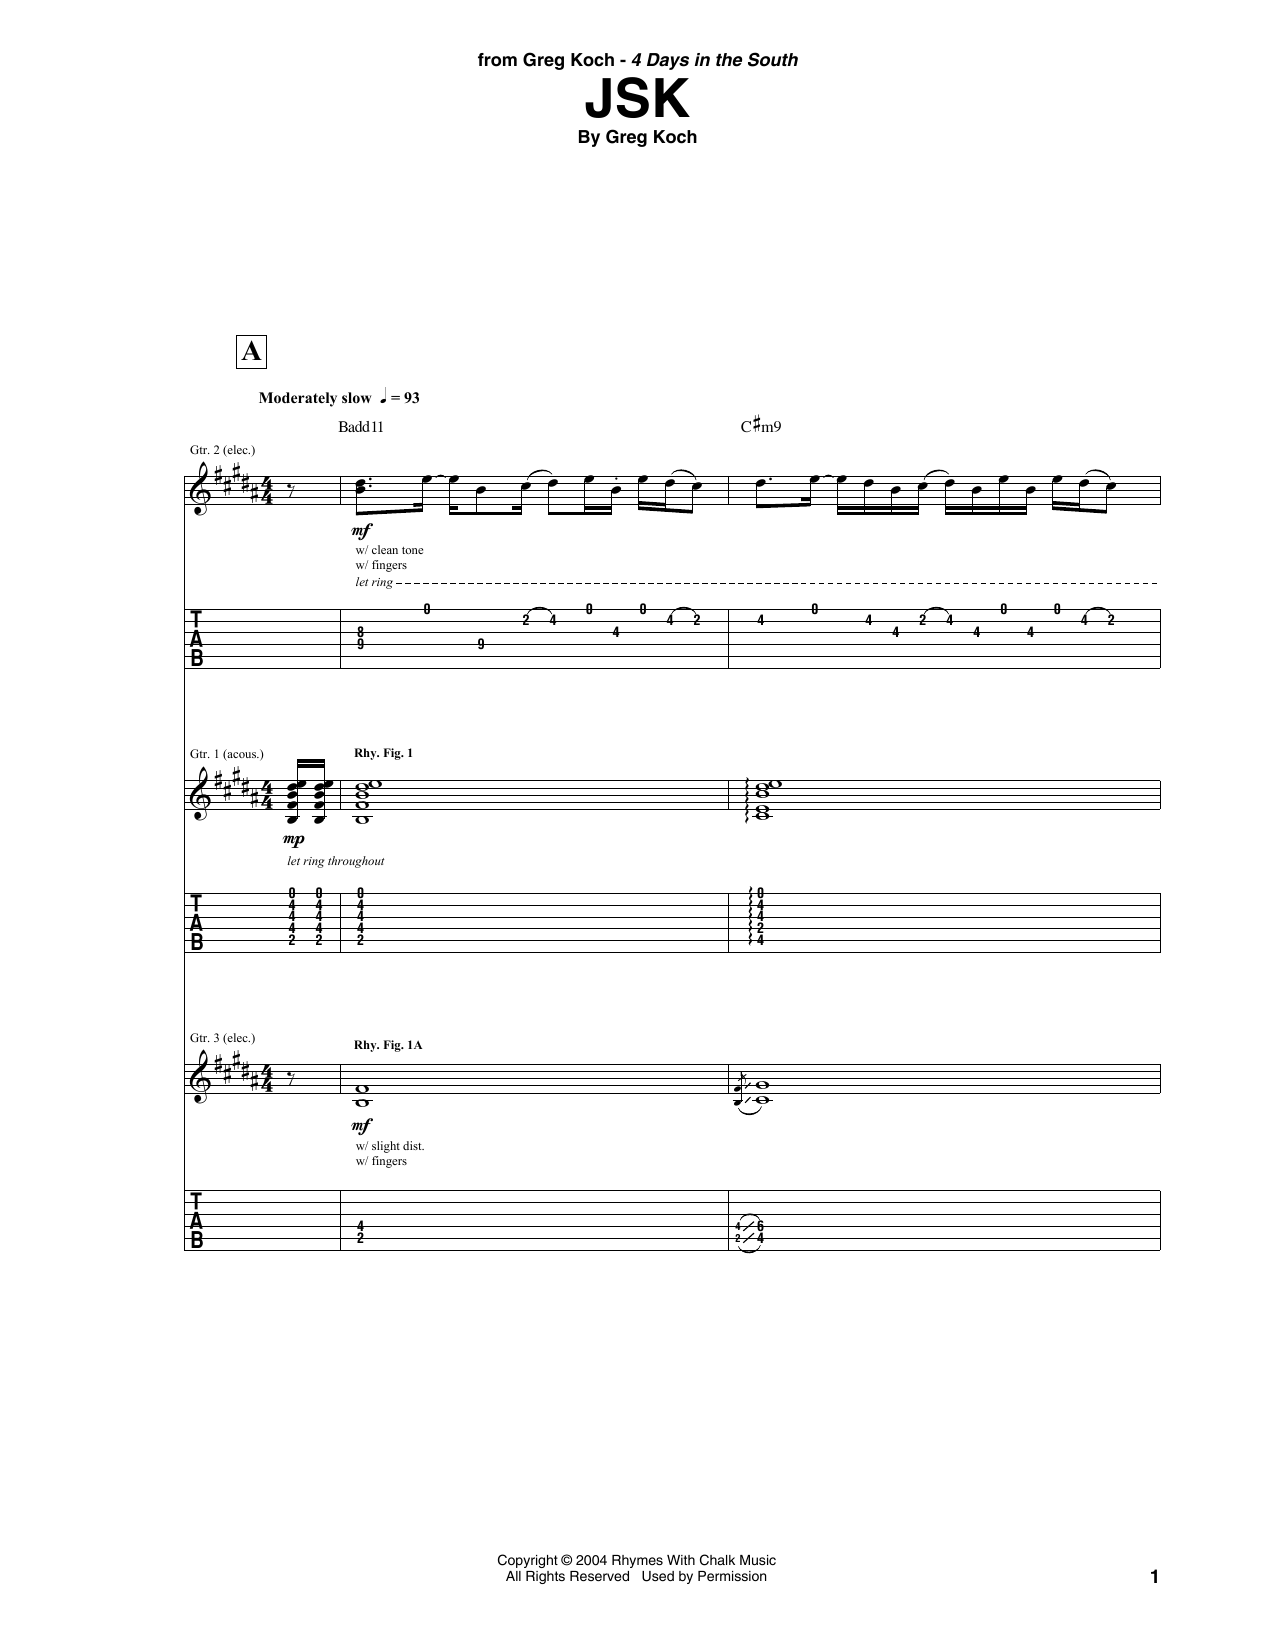 Greg Koch JSK Sheet Music Notes & Chords for Guitar Tab - Download or Print PDF